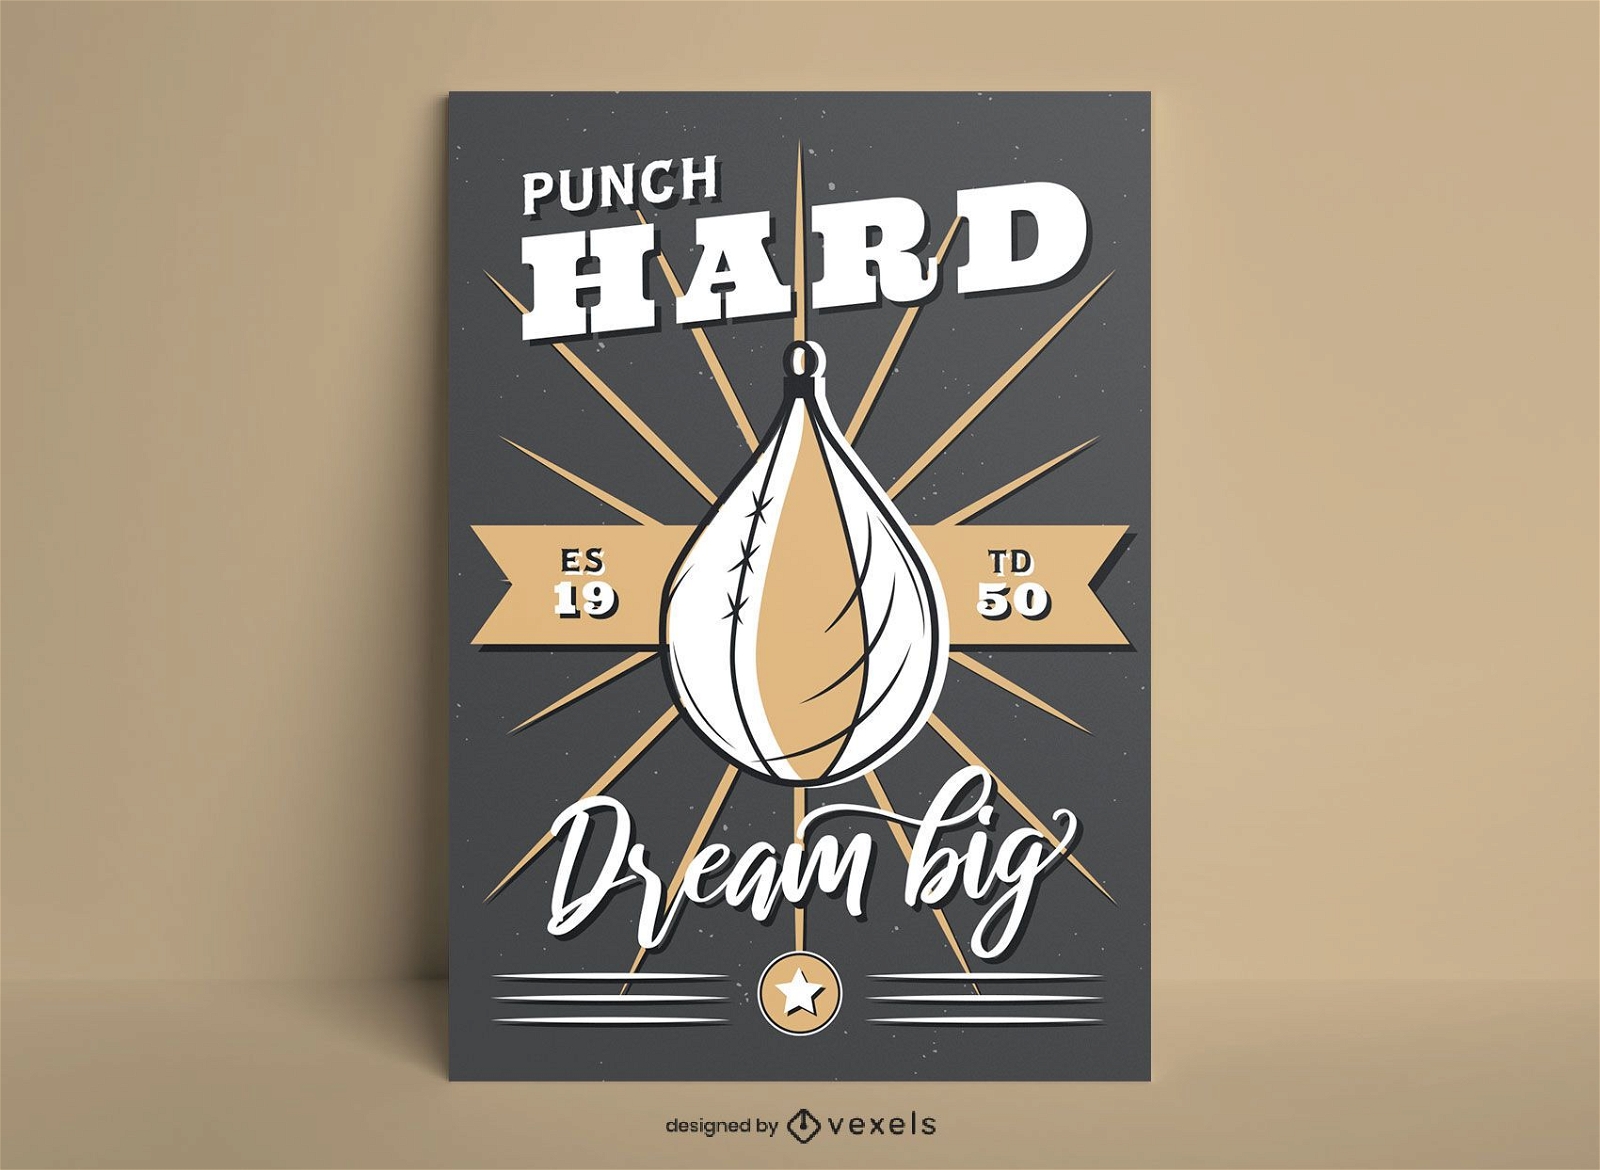 Punch hard dream big poster